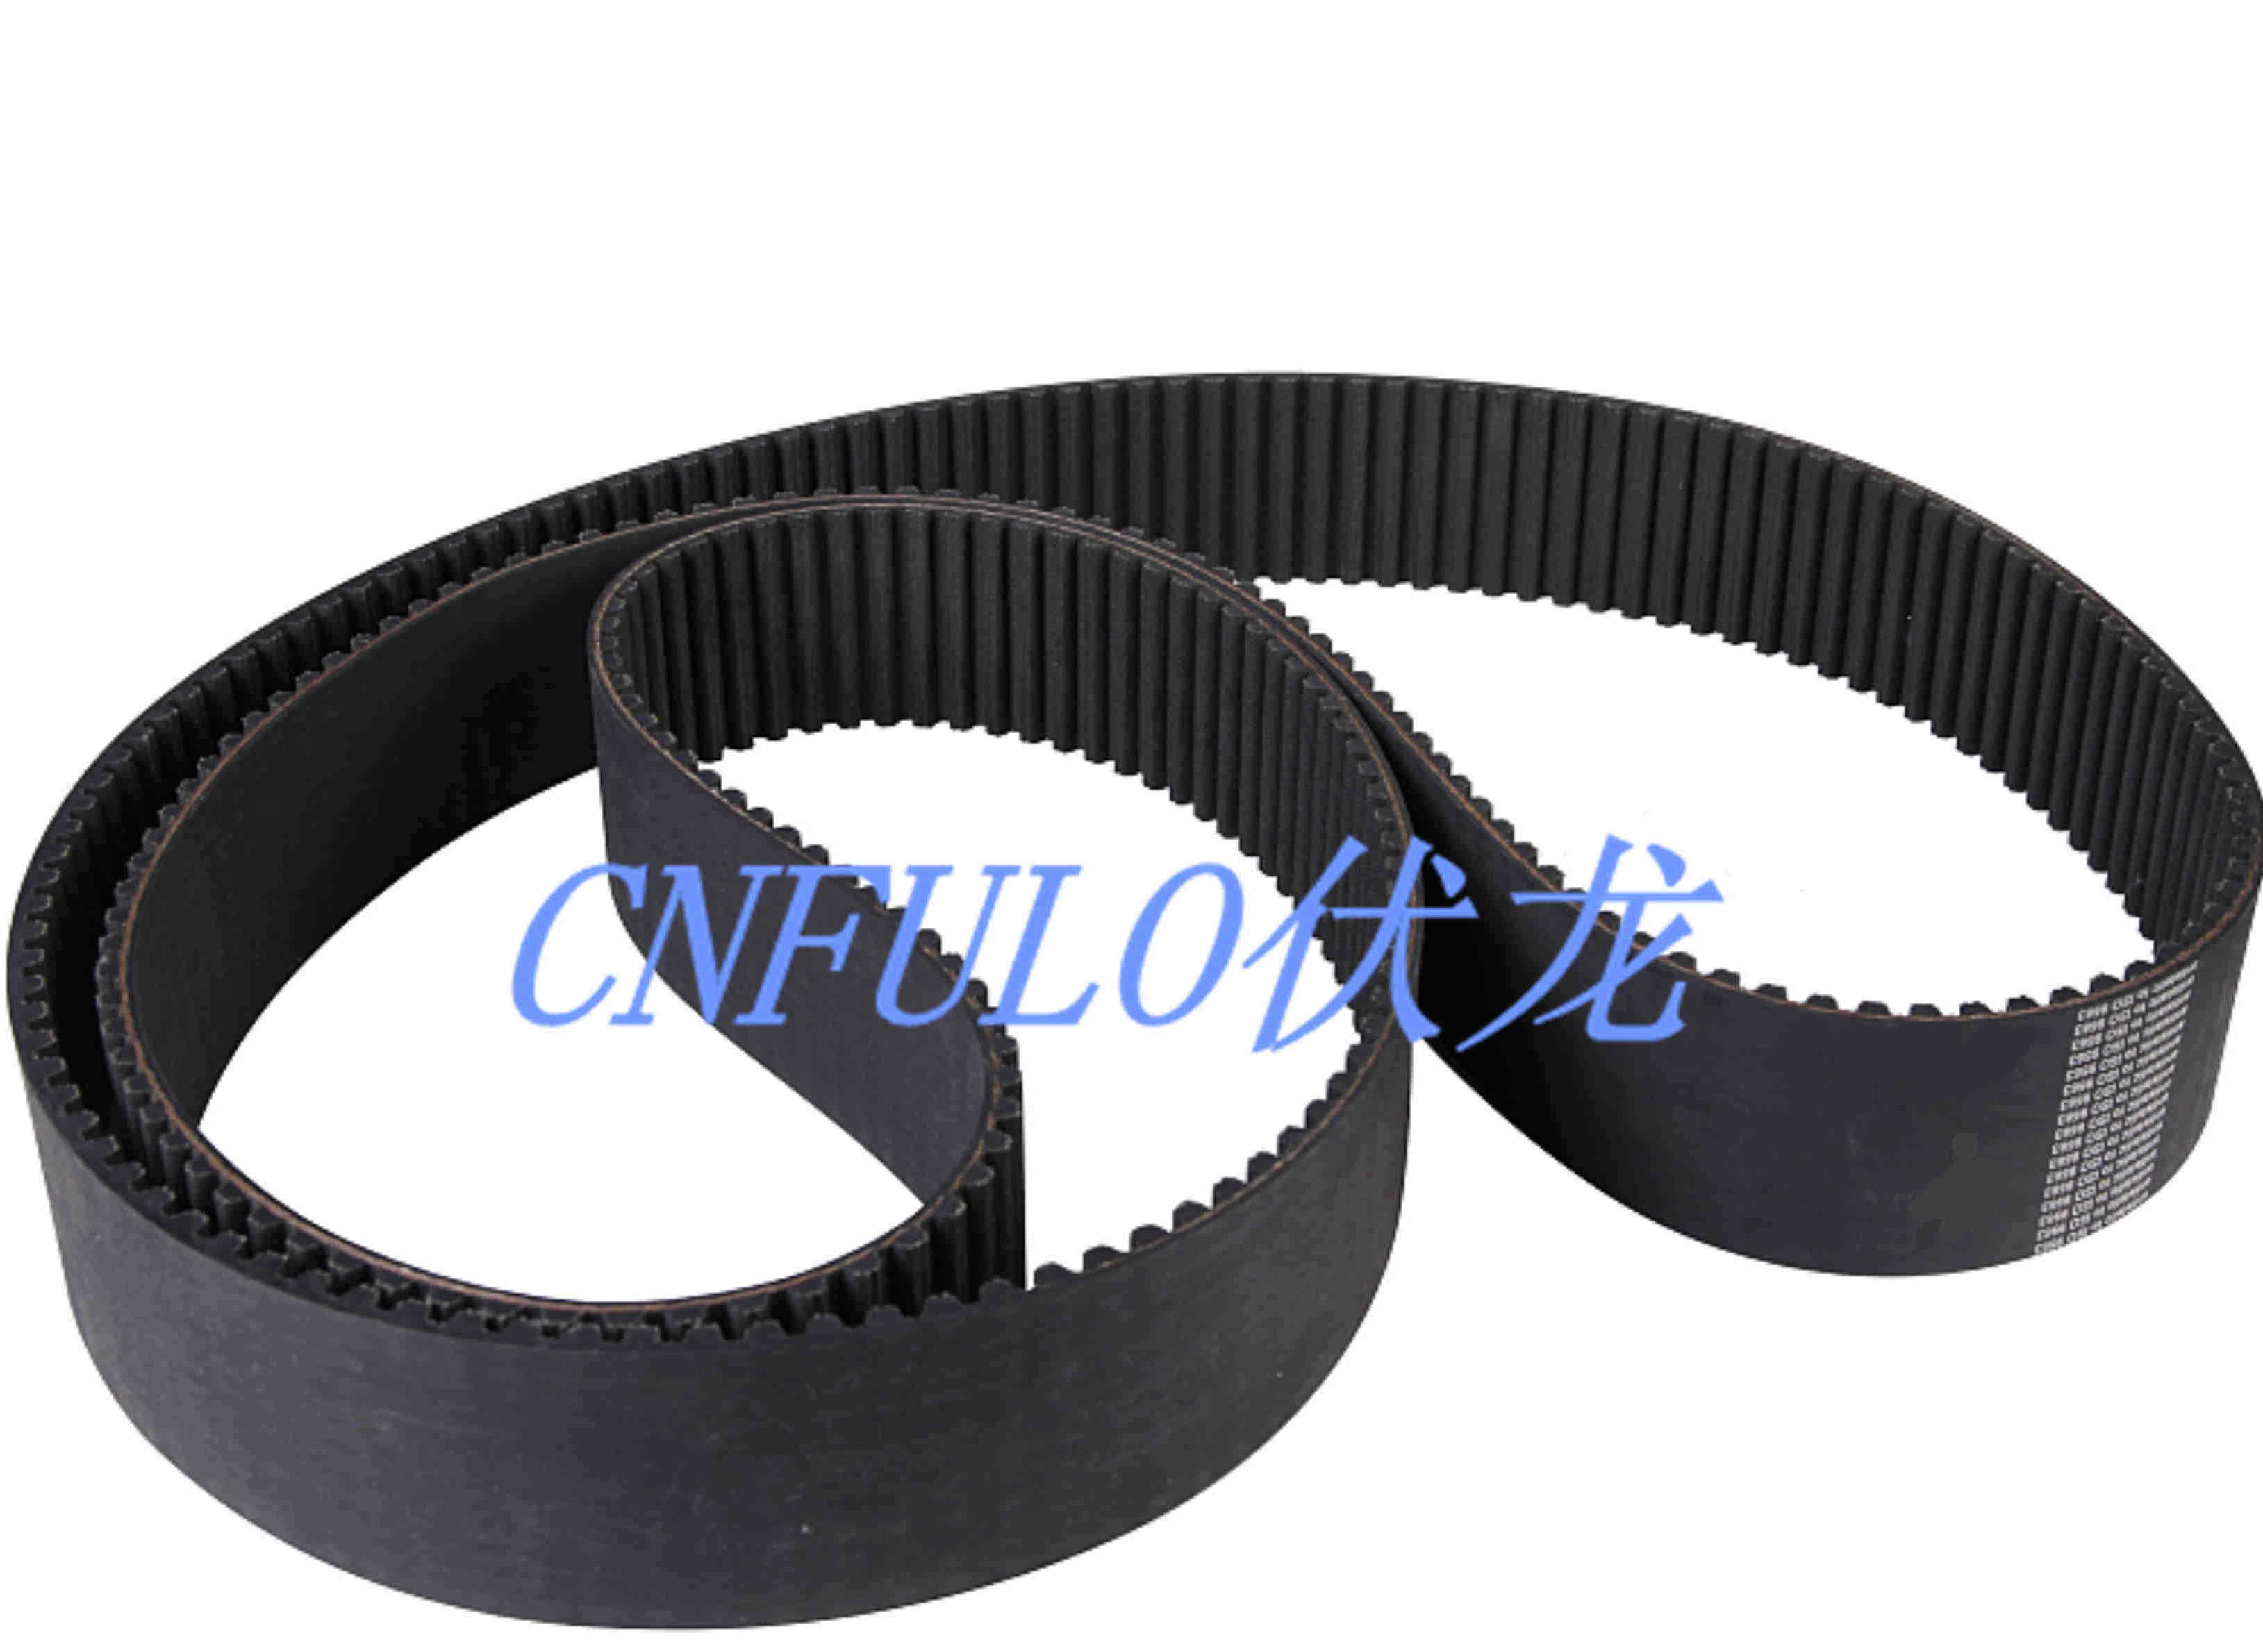 Industrial Rubber Timing Belt, Power Transmission/Texitle/Printer Belt, 205h